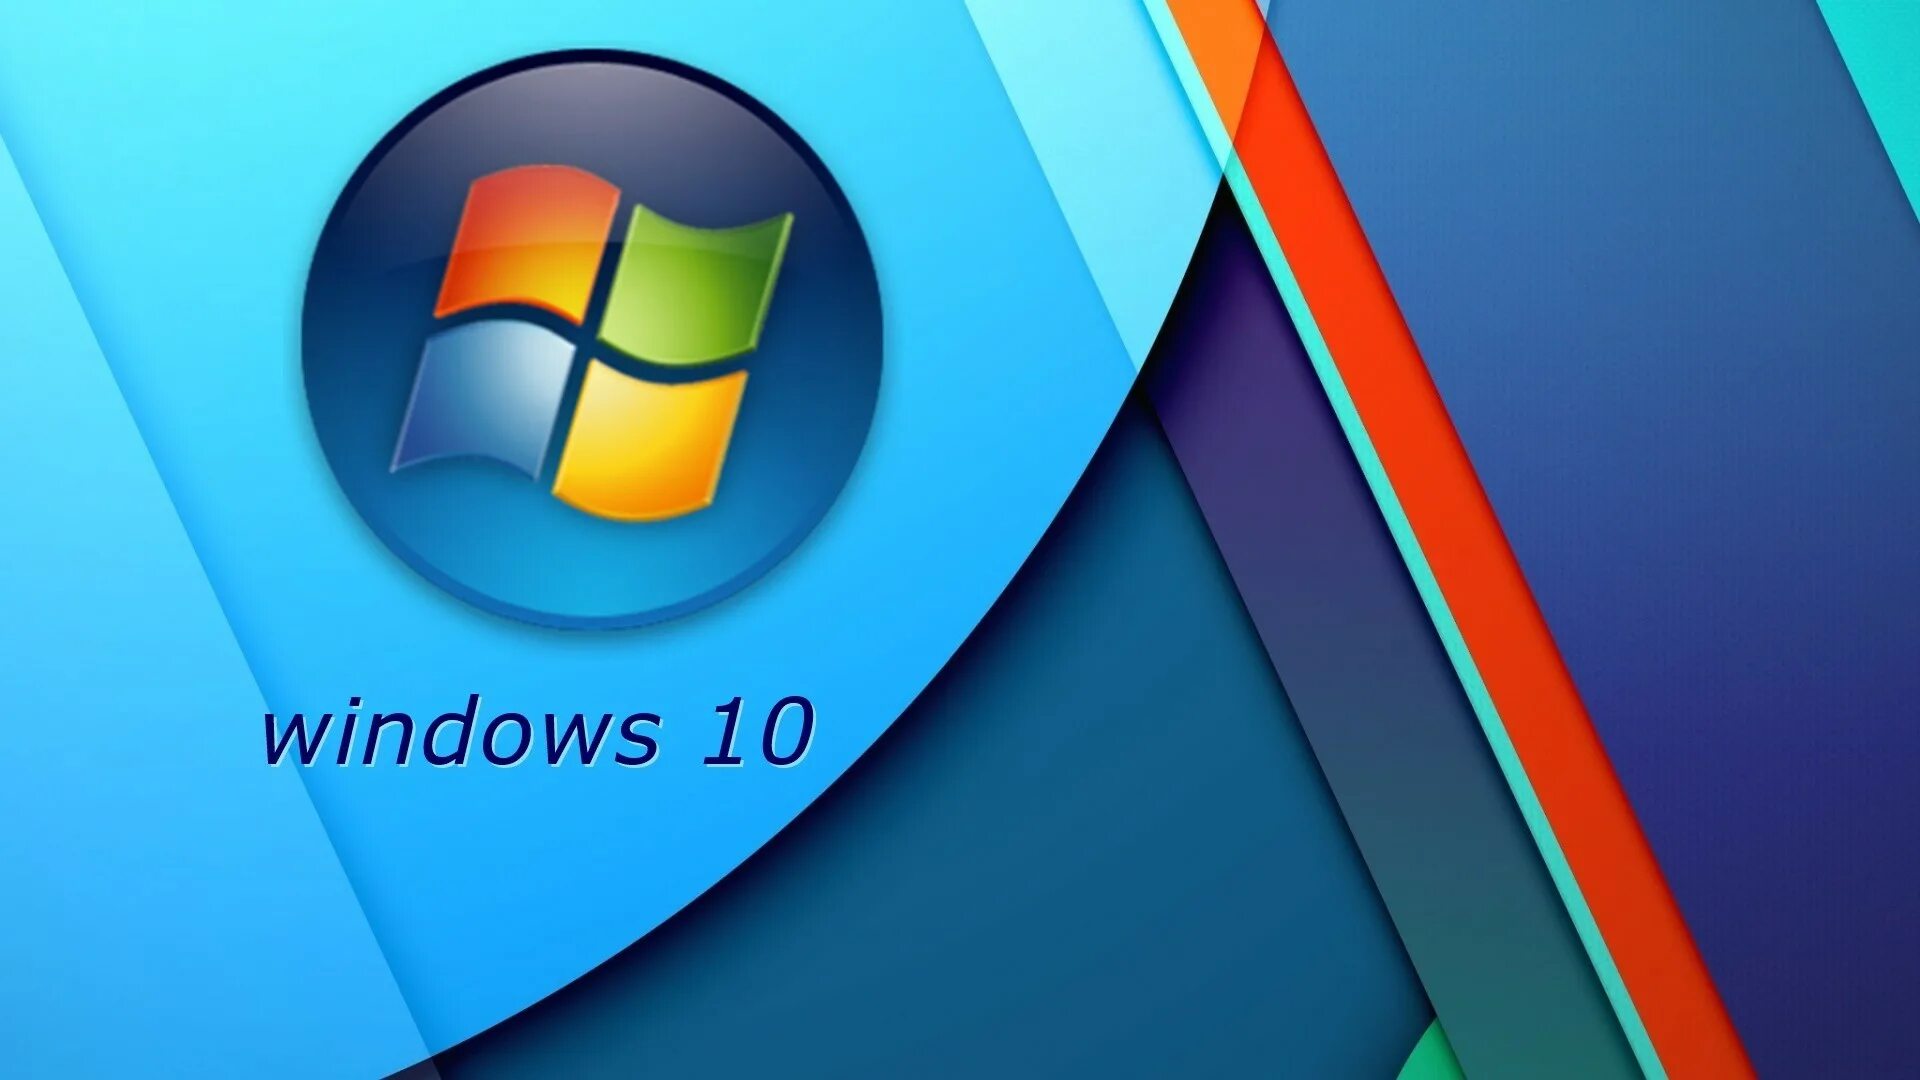 Windows 11 s. Обои Windows. Обои Windows 10. Обои на компьютер виндовс 10. Красивый логотип виндовс.